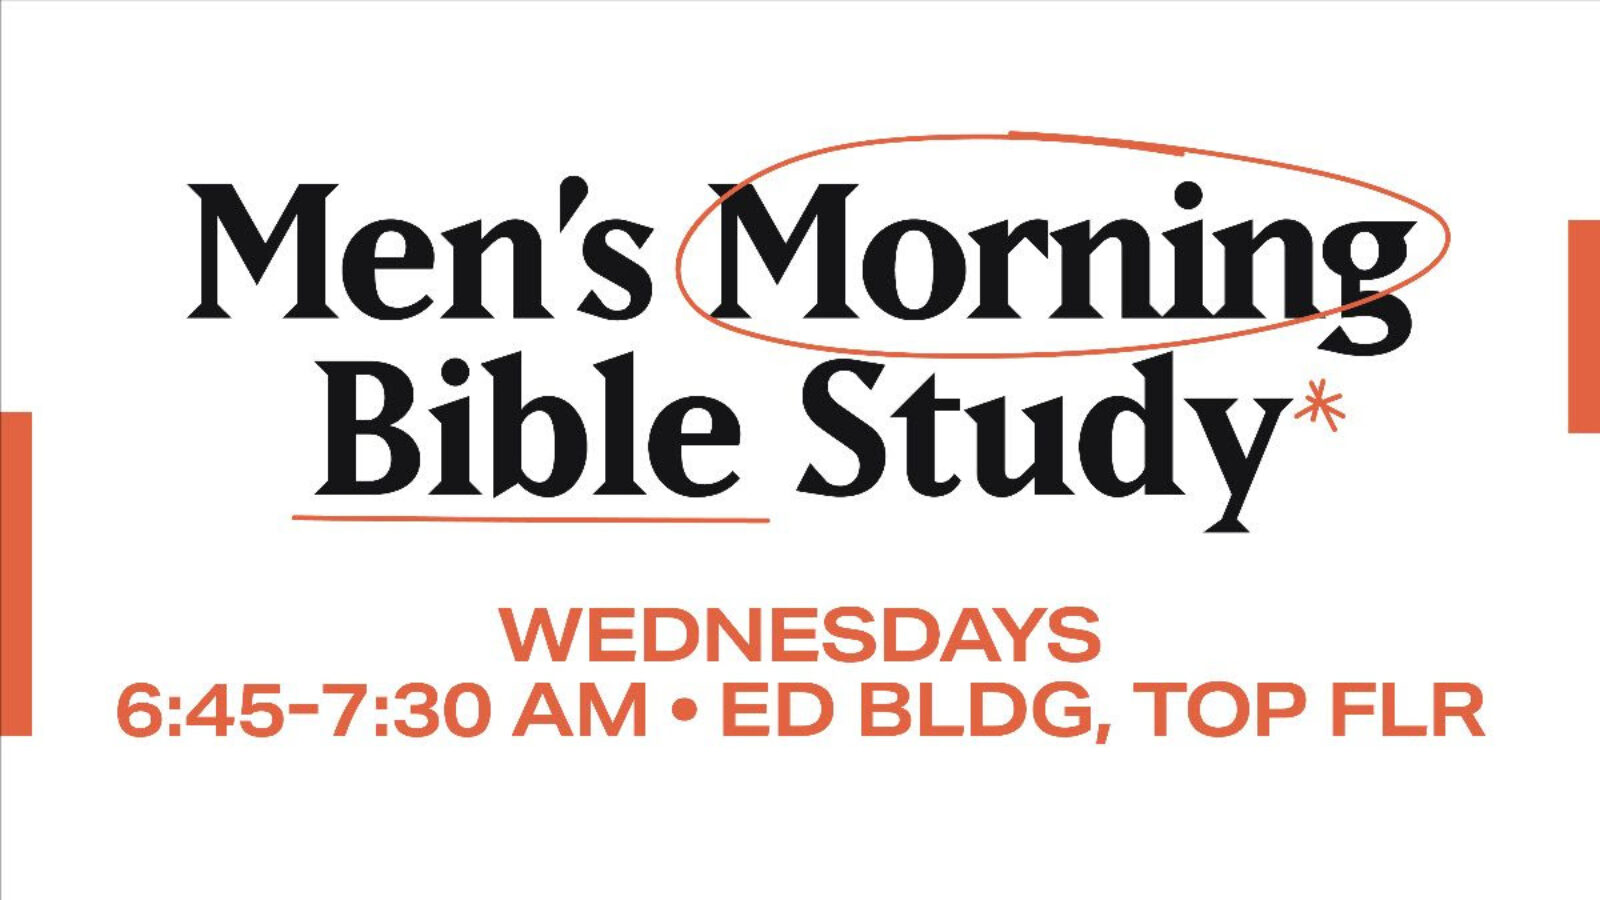 MENS MORNING BIBLE STUDY